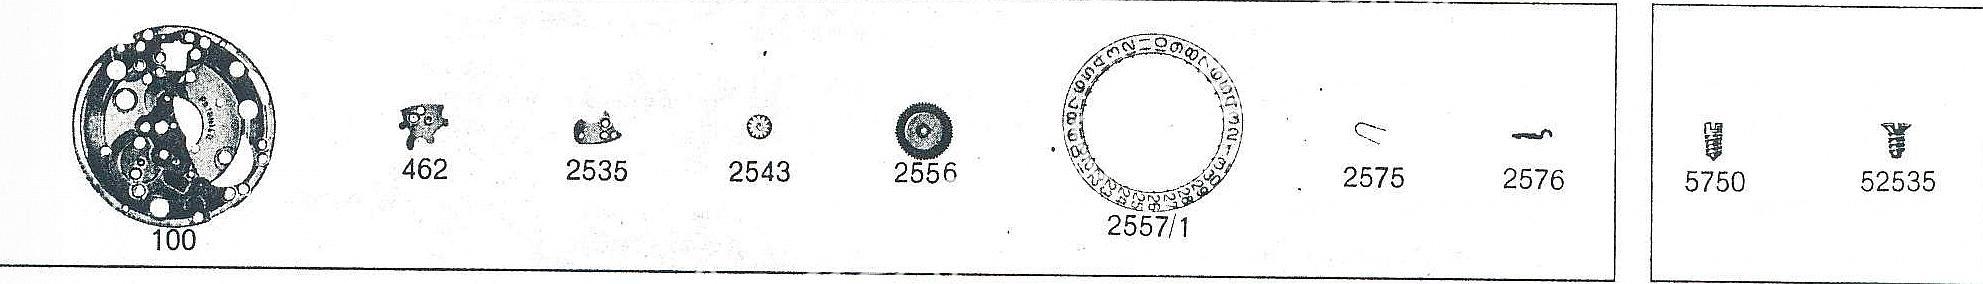 Enicar AR 765 watch date parts